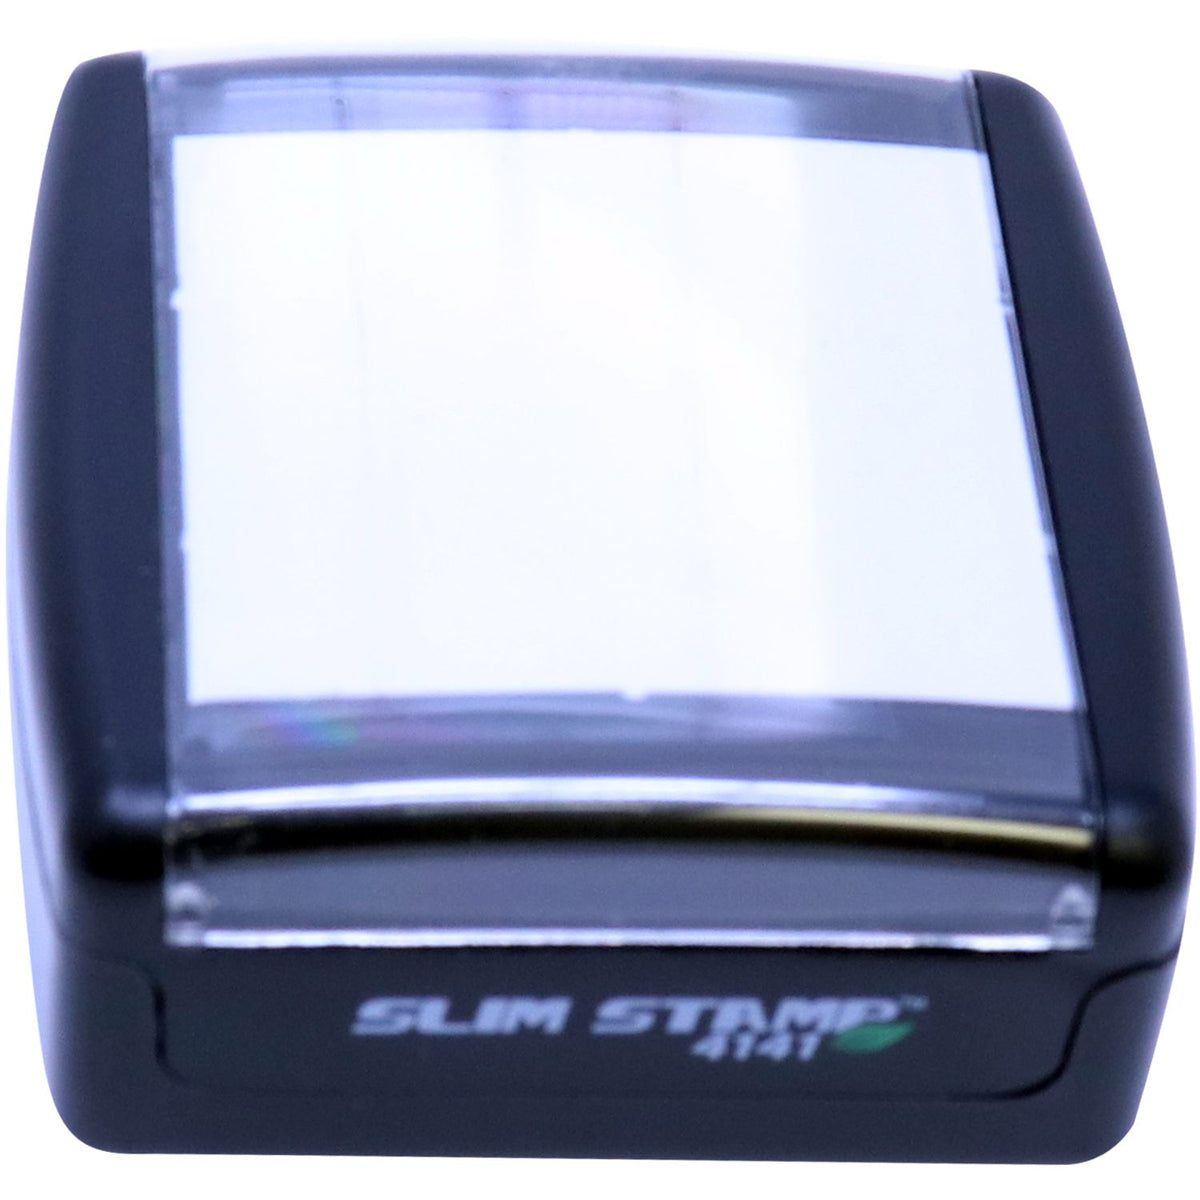 Slimstamp Custom Stamp 4141 Top Close Up